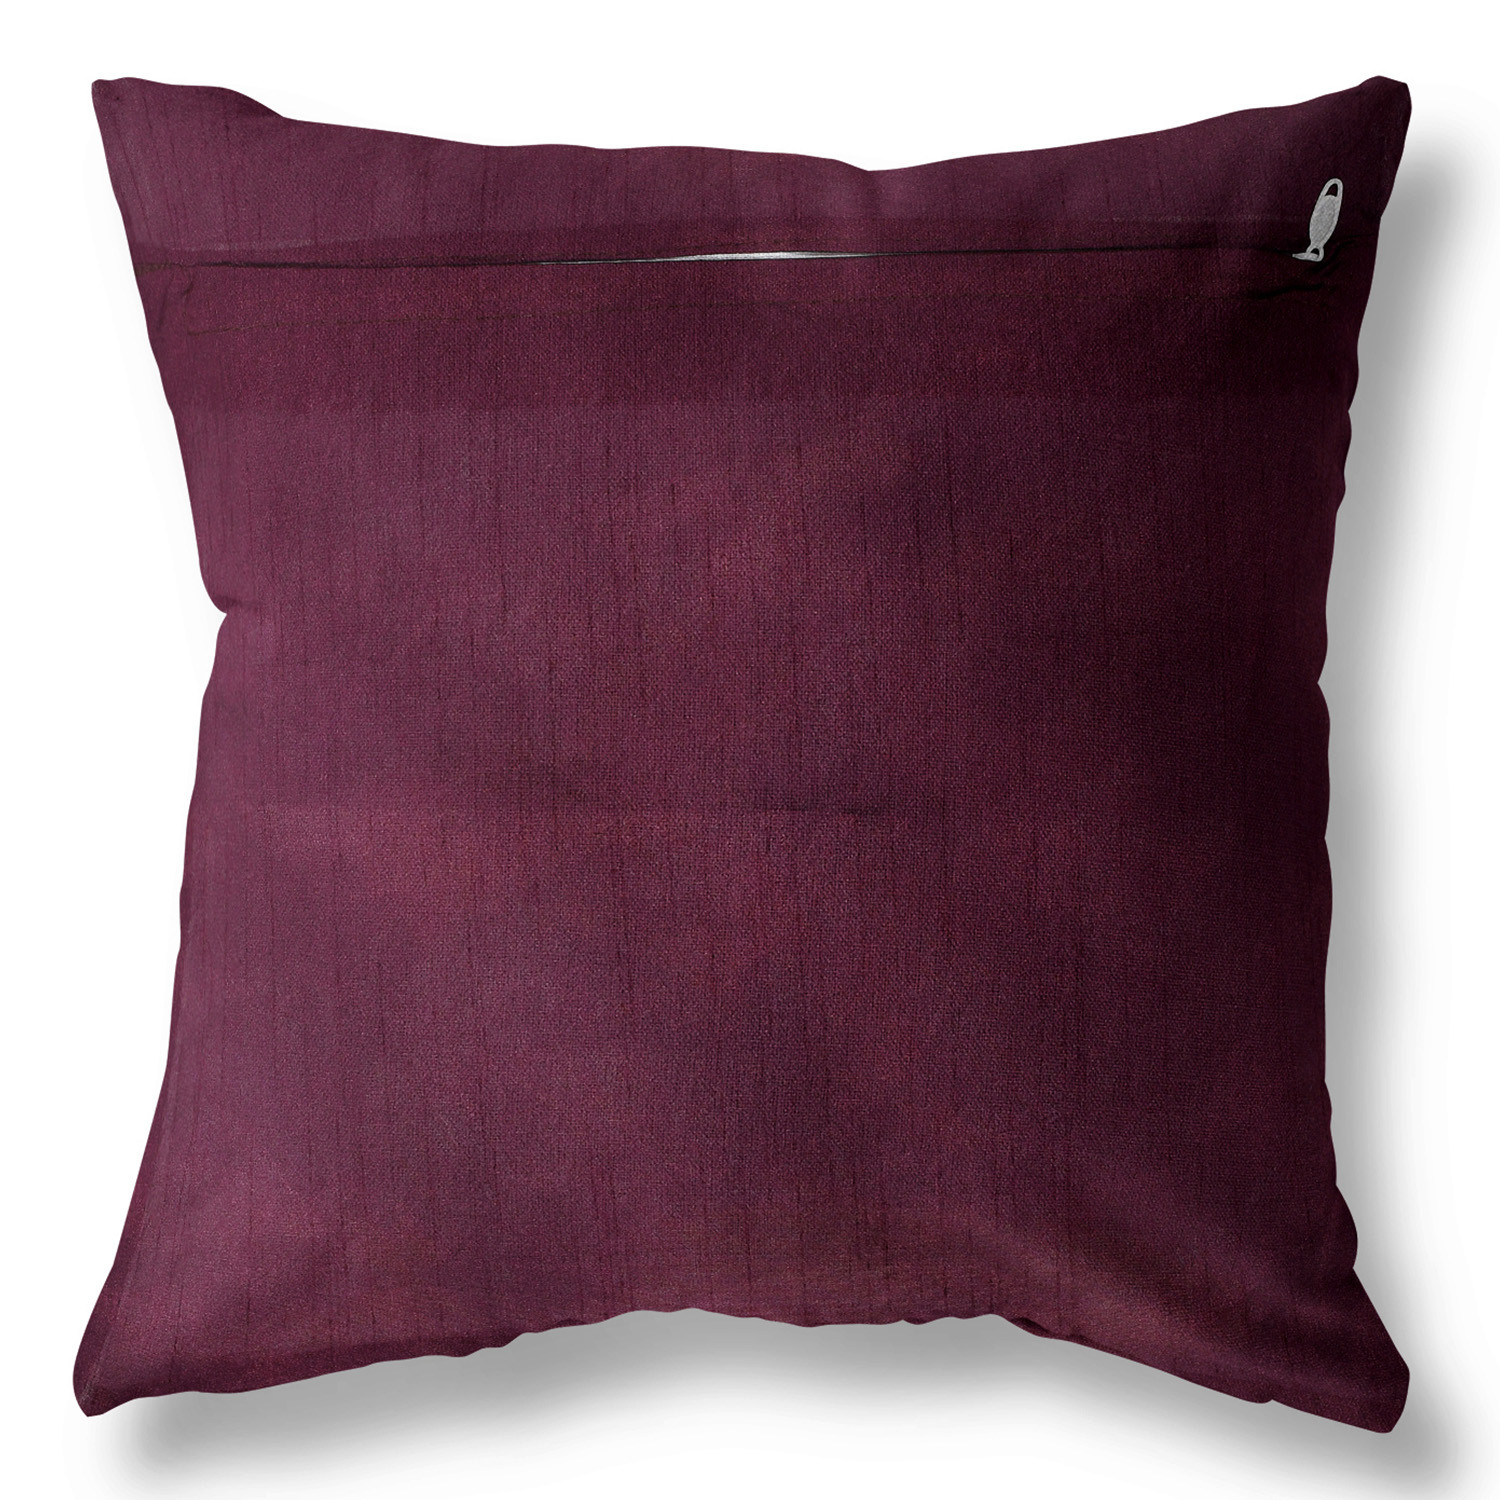 Kuber Industries Cushion Cover|Sofa Cushion Covers|Ractangle Cushion Covers|Cushion Covers 16 inch x 16 inch|Cushion Cover Set of 5 (Green)